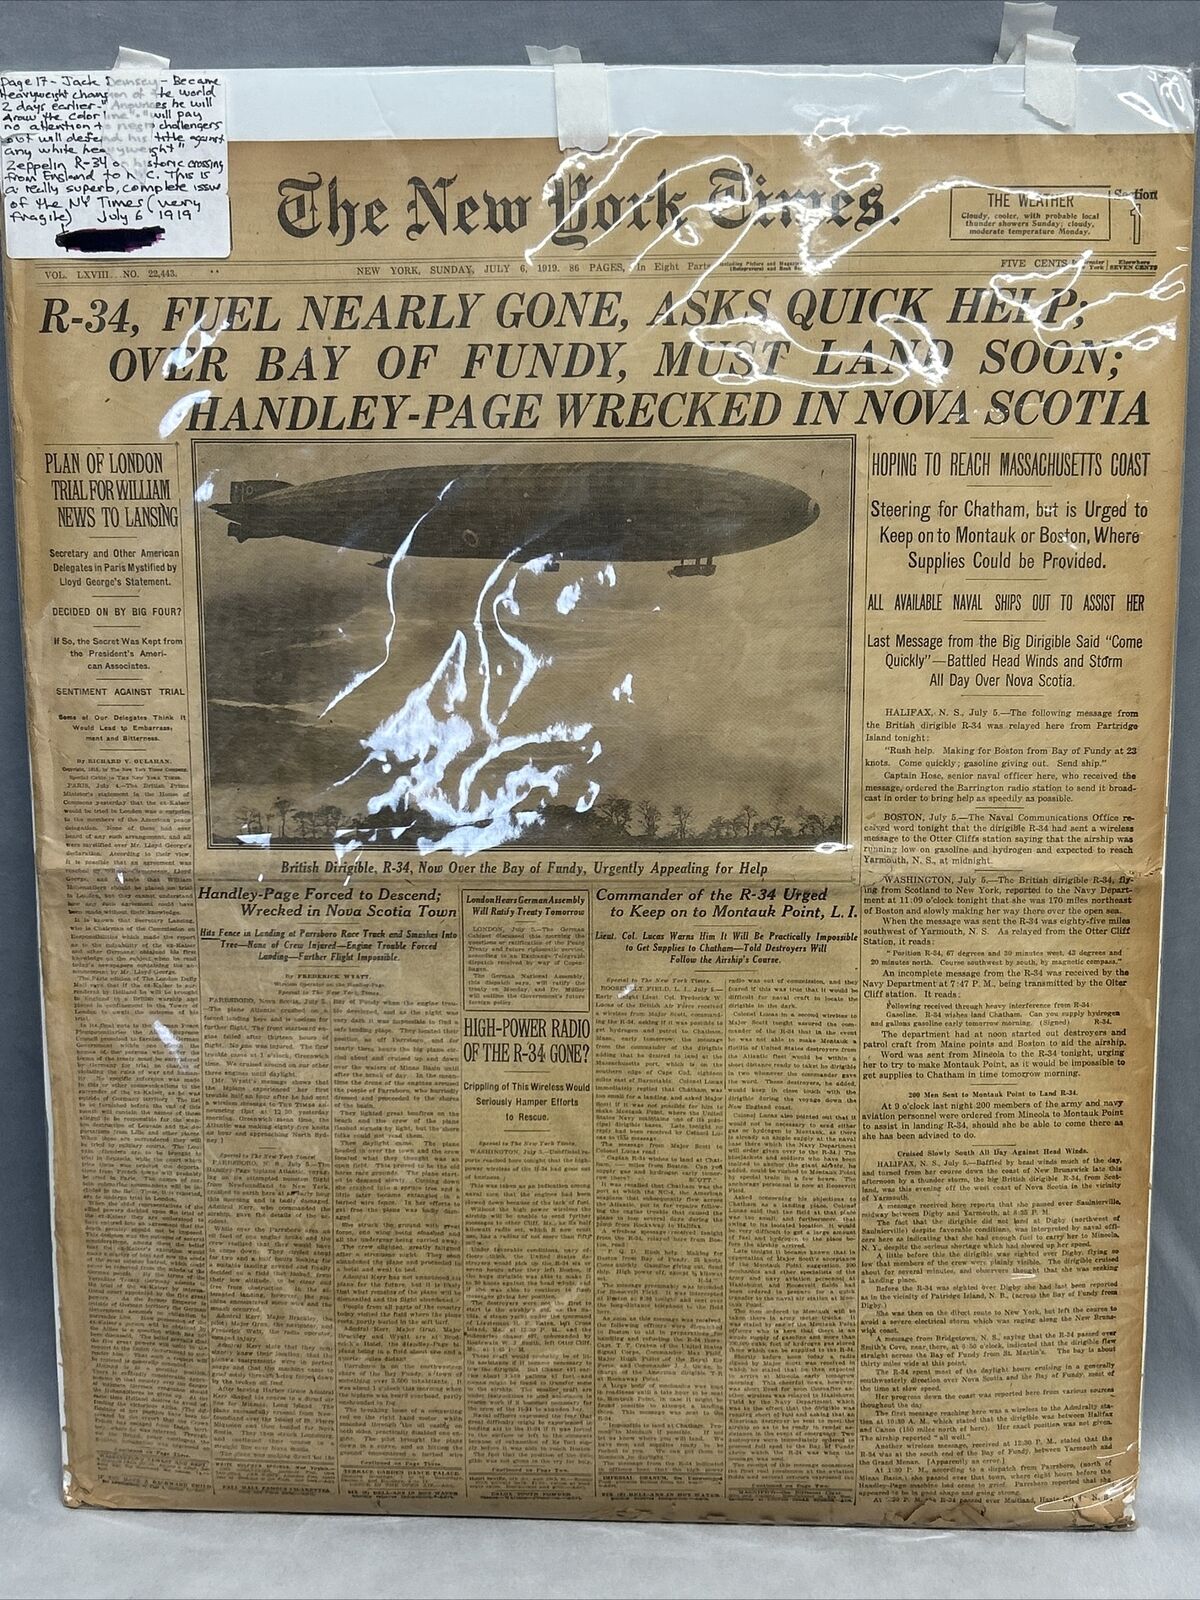 New York Times July 6th 1919 Newspaper Jack Dempsey Heavyweight Champion R-34